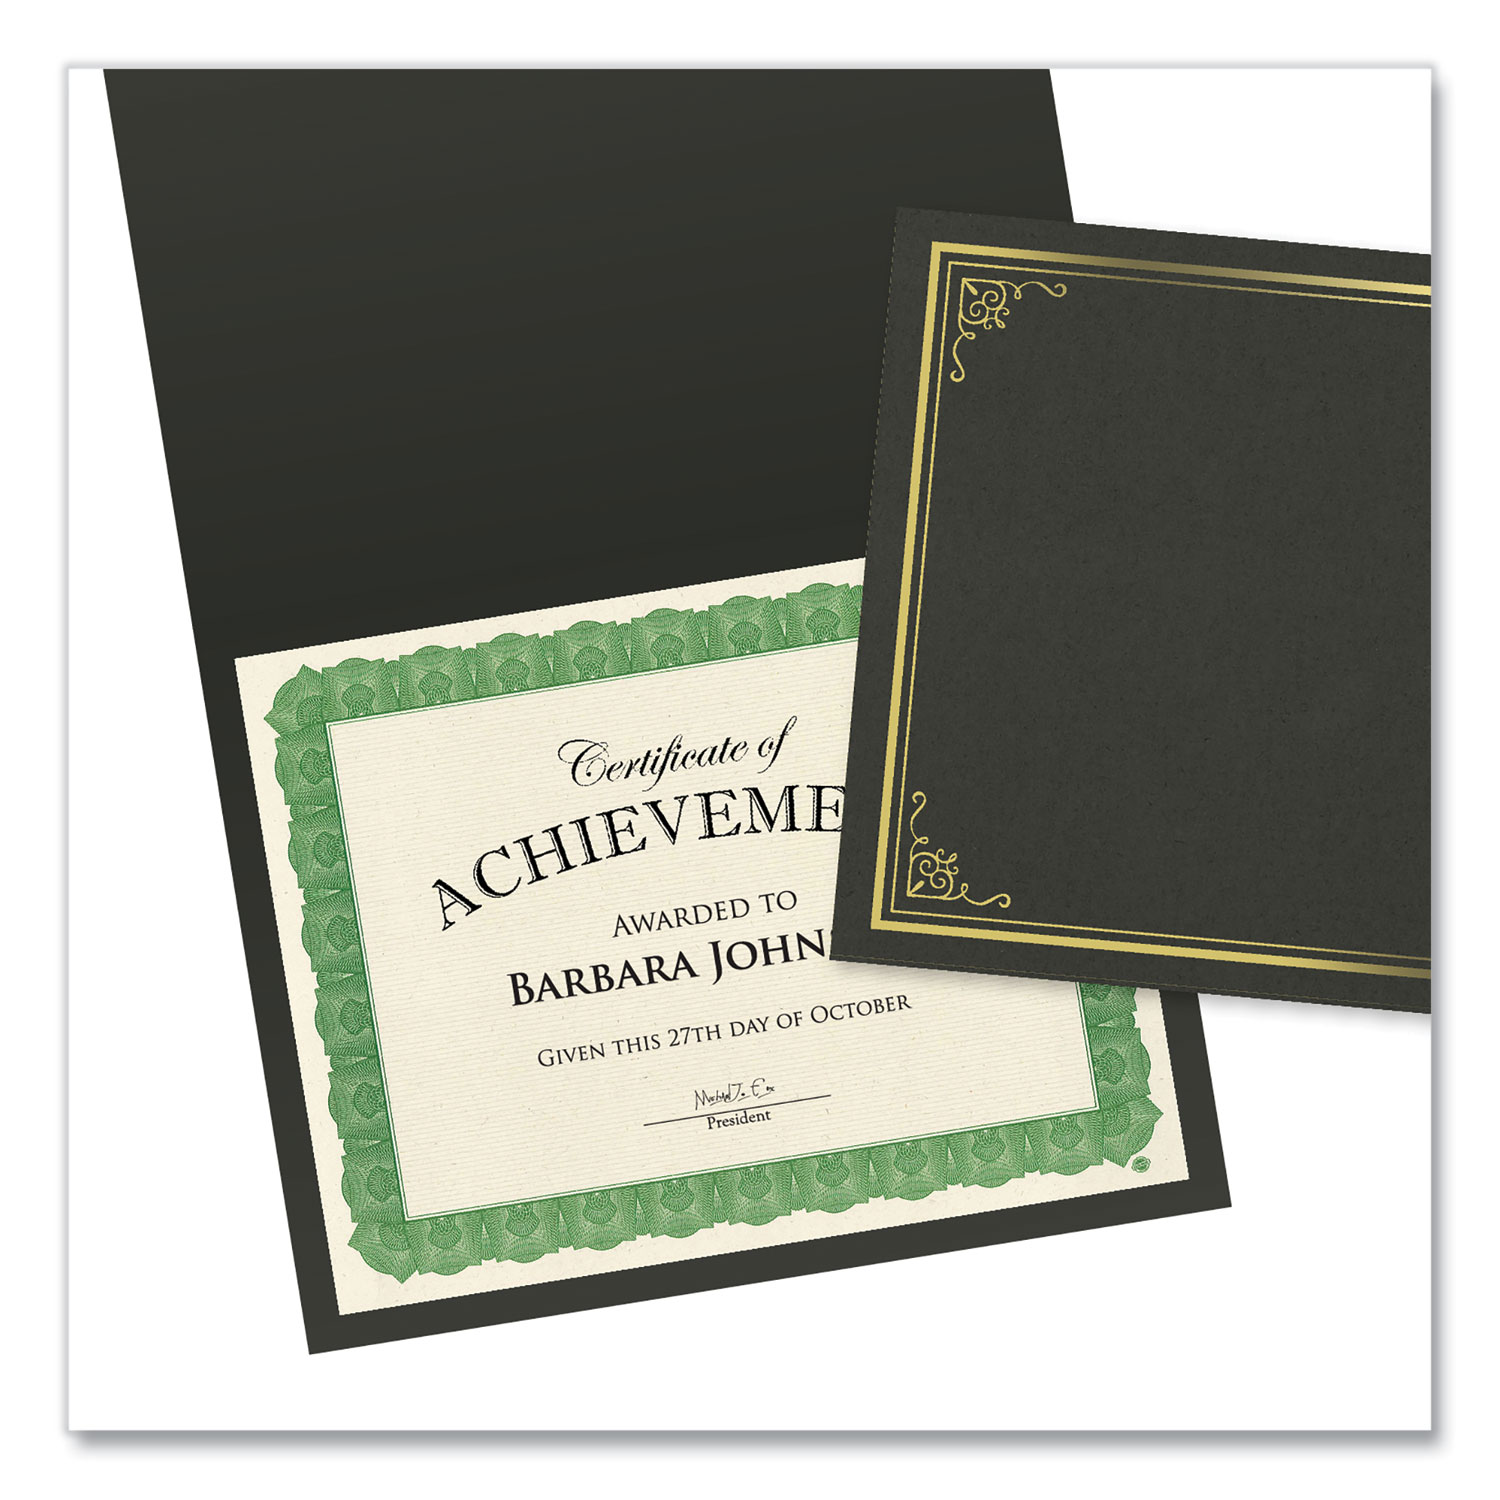 Geographics Foil Stamped Award Certificates, Gold Serpentine Border - 12 pack